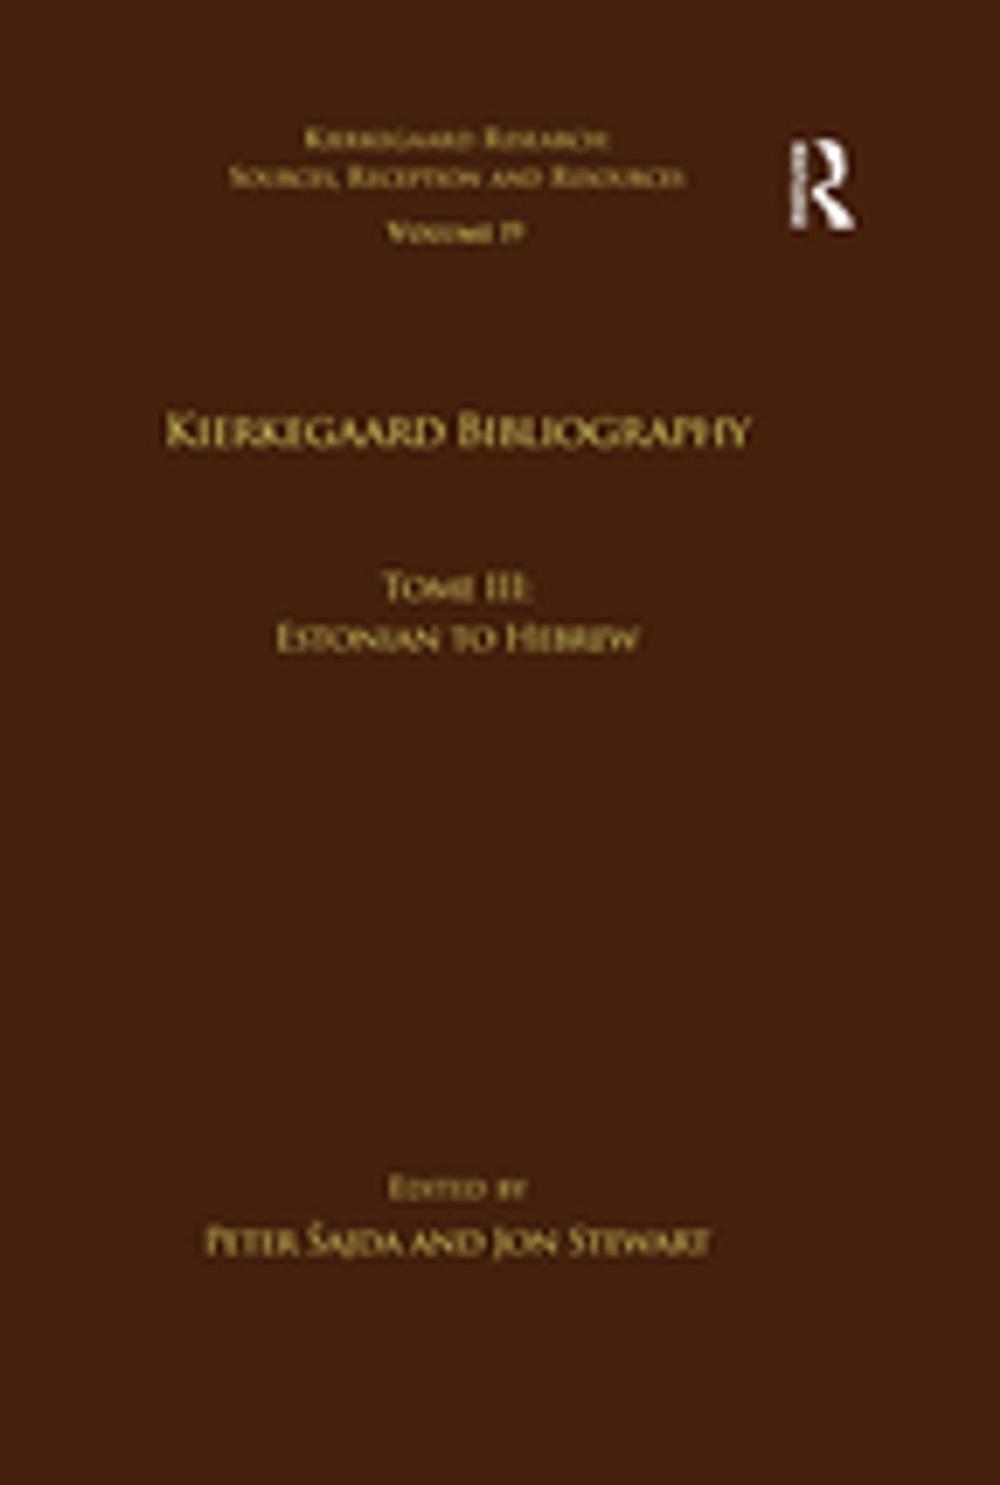 Big bigCover of Volume 19, Tome III: Kierkegaard Bibliography